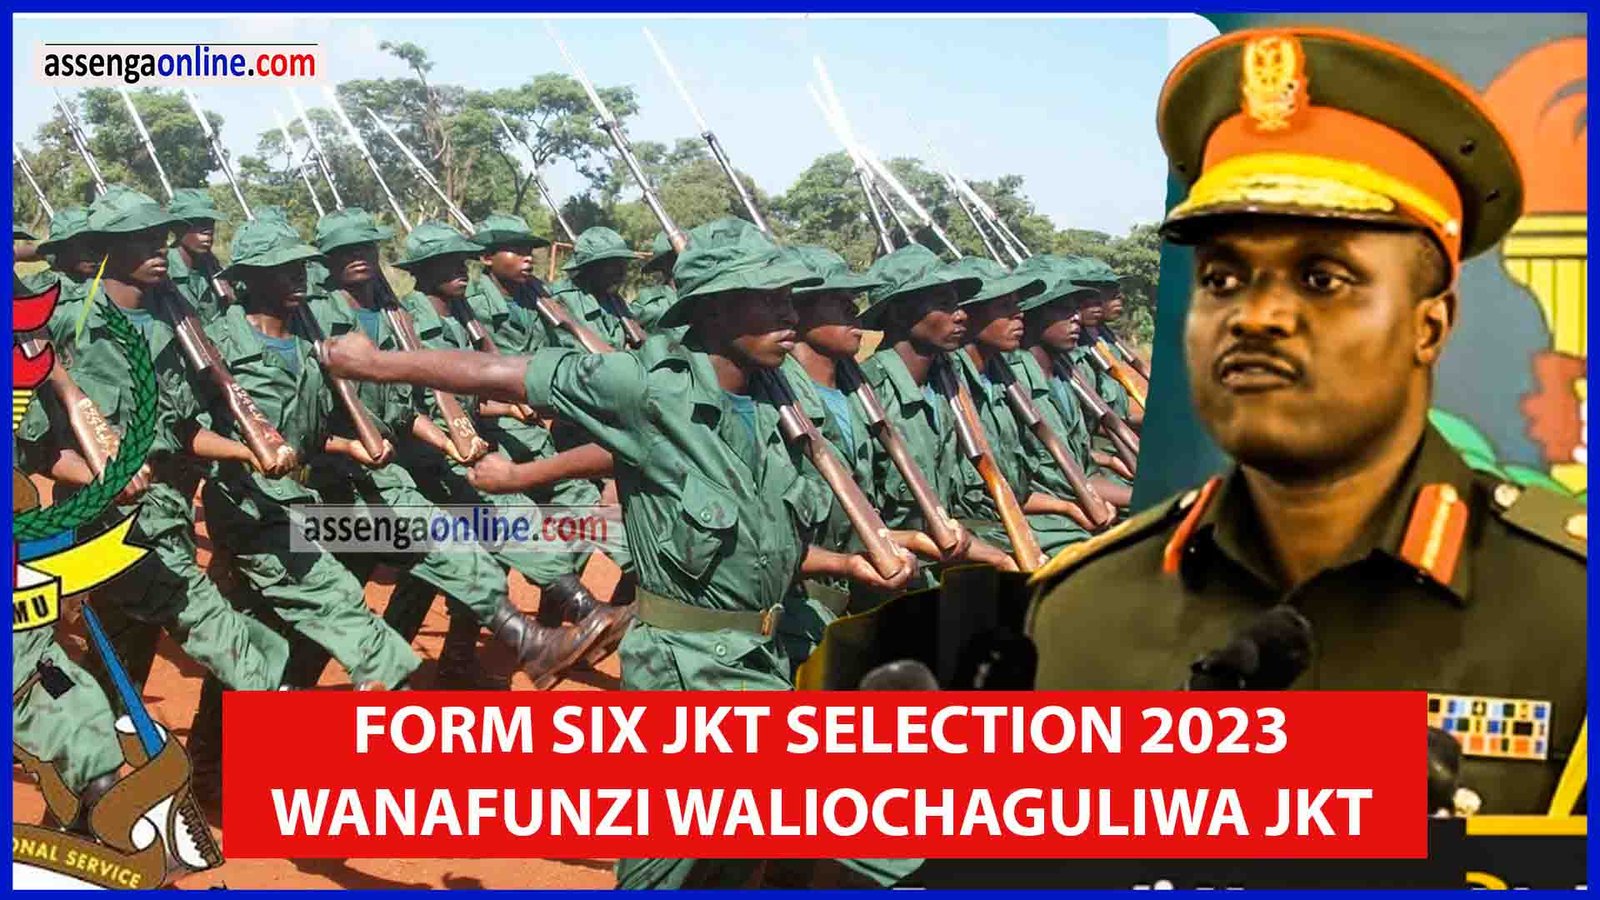 Form six JKT selection 2023